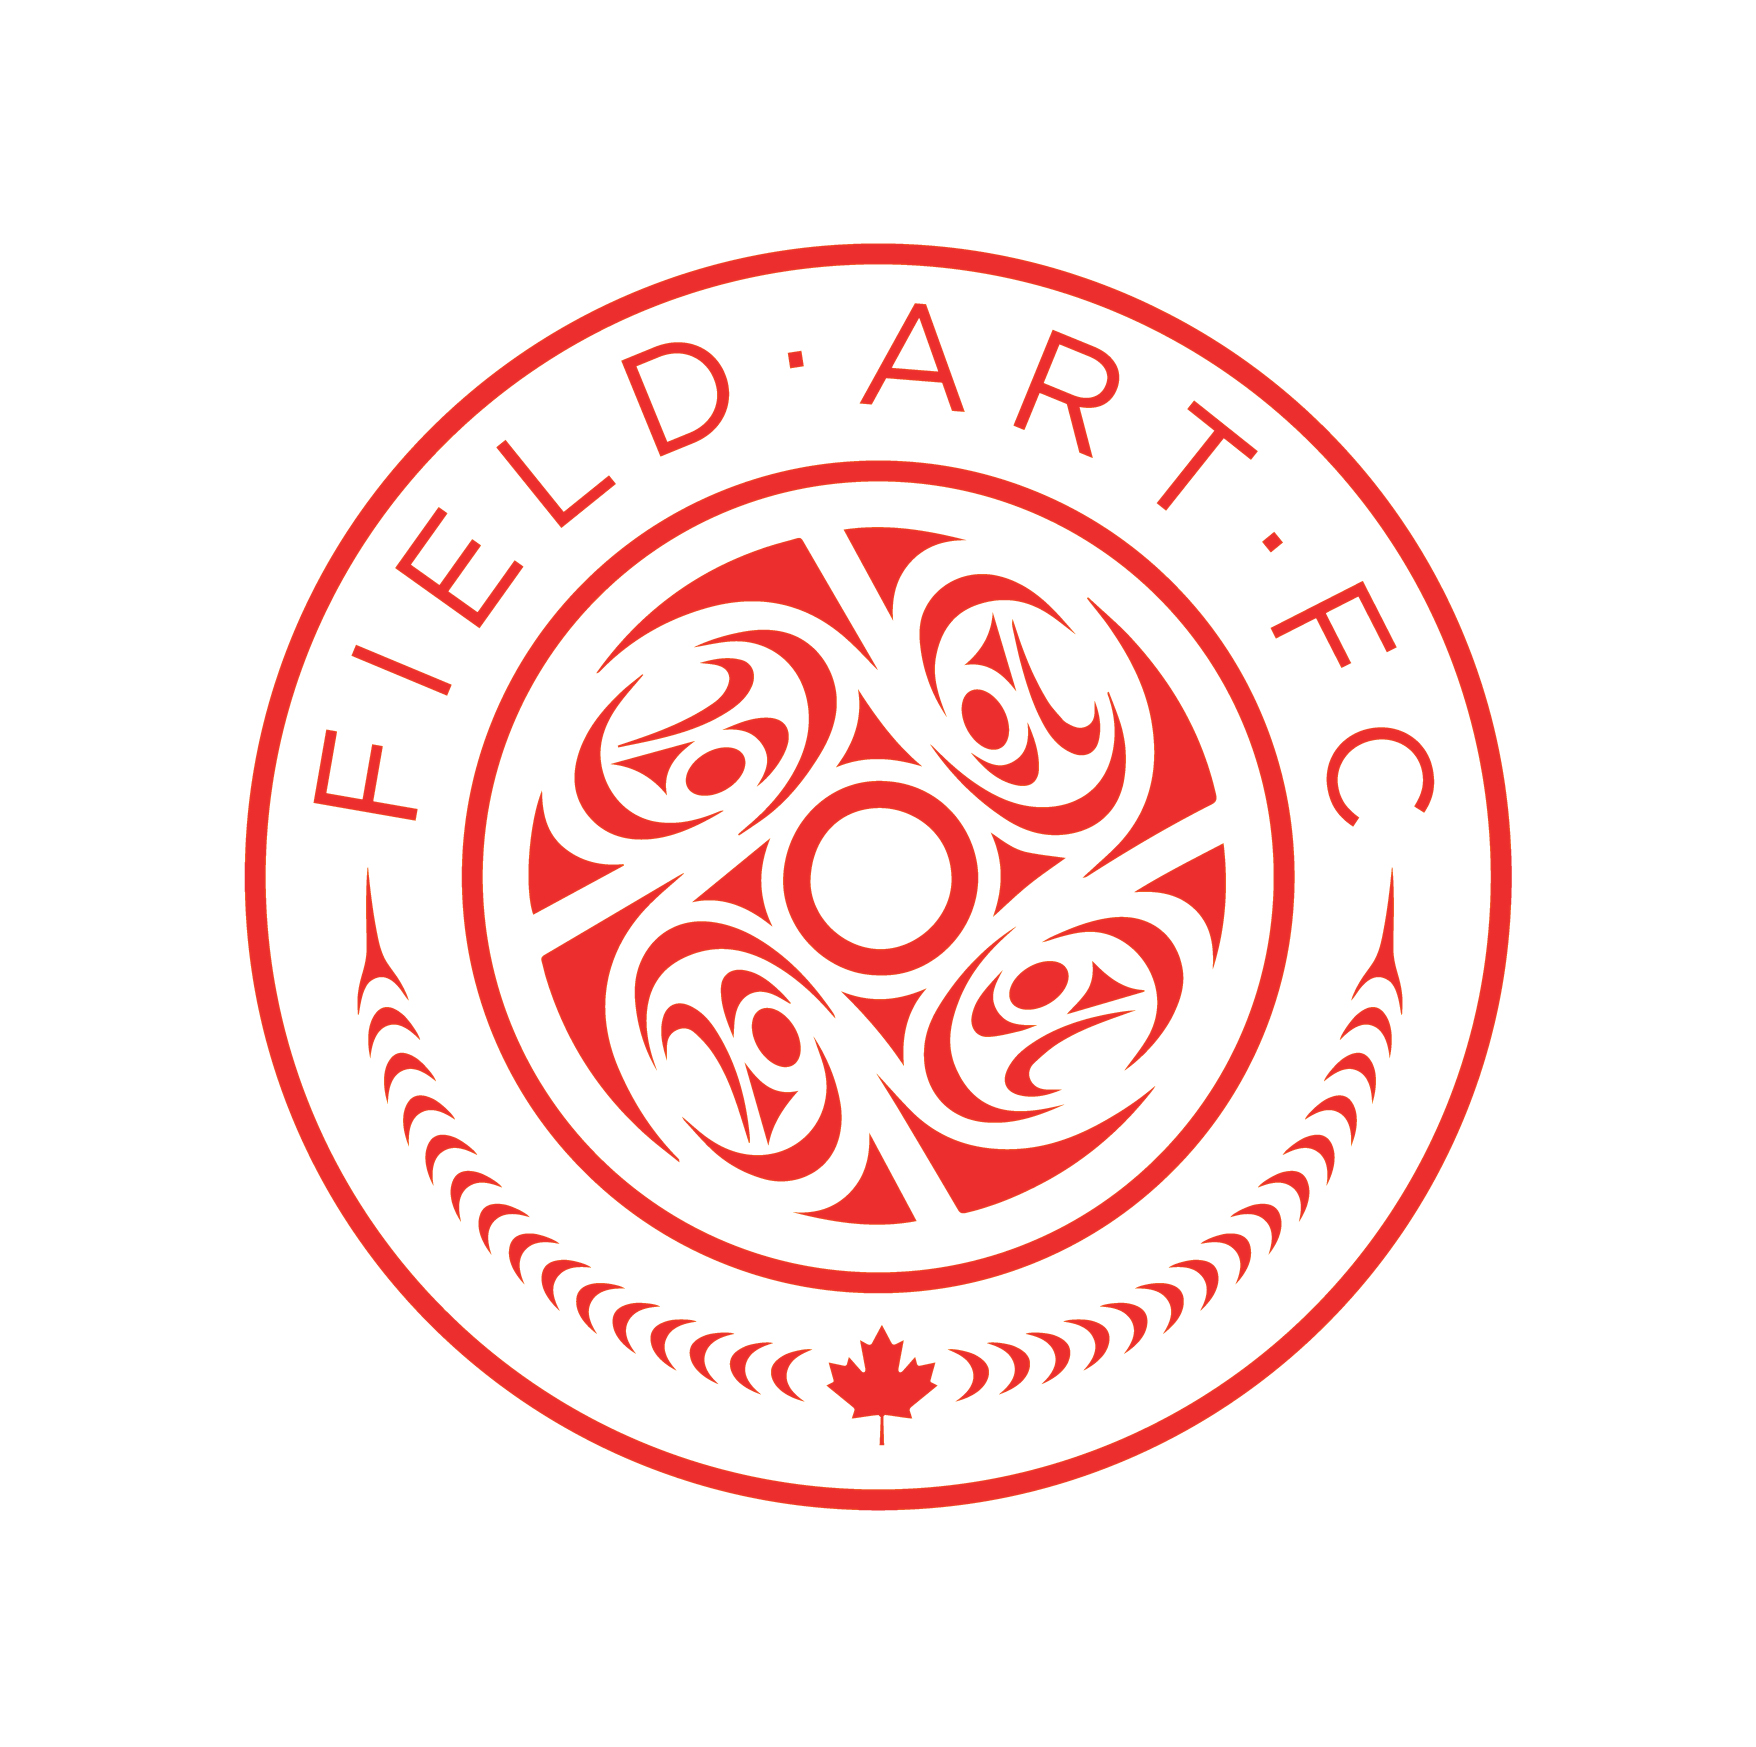 Field Art Soccer Association